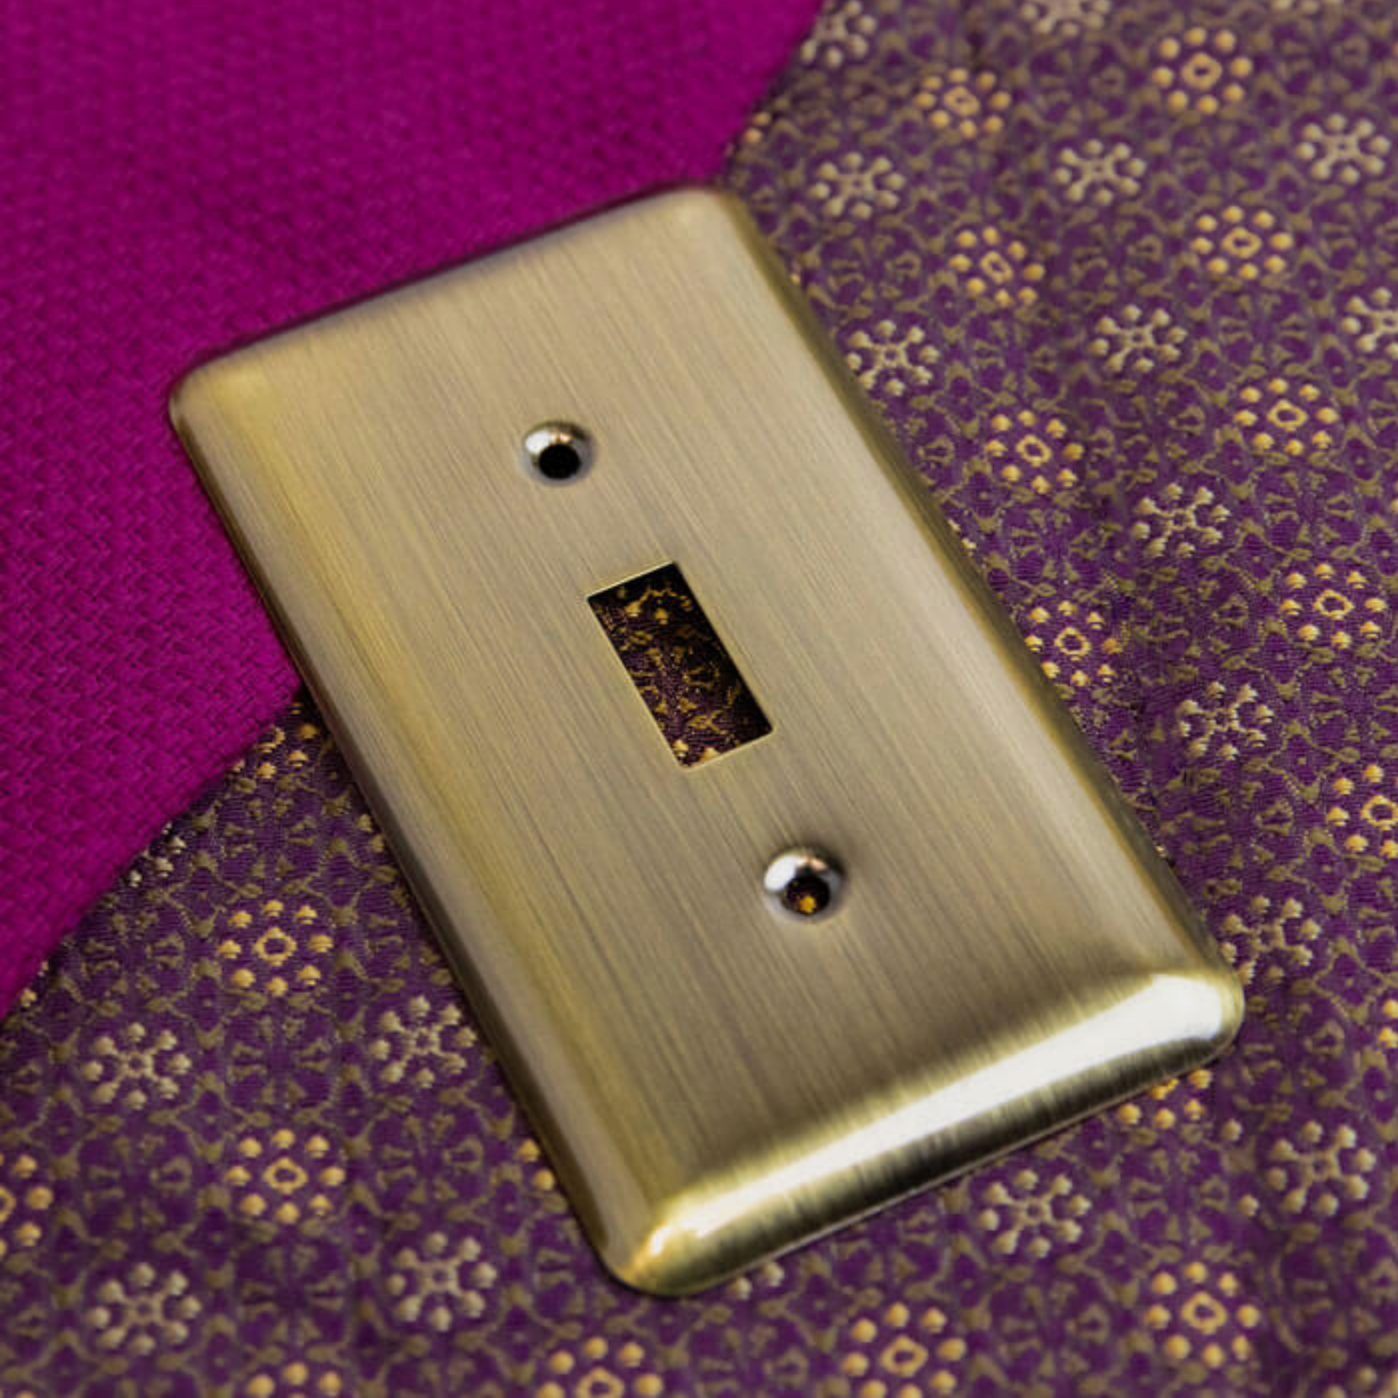 Devon Brushed Brass Steel - 1 Phone Jack Wallplate